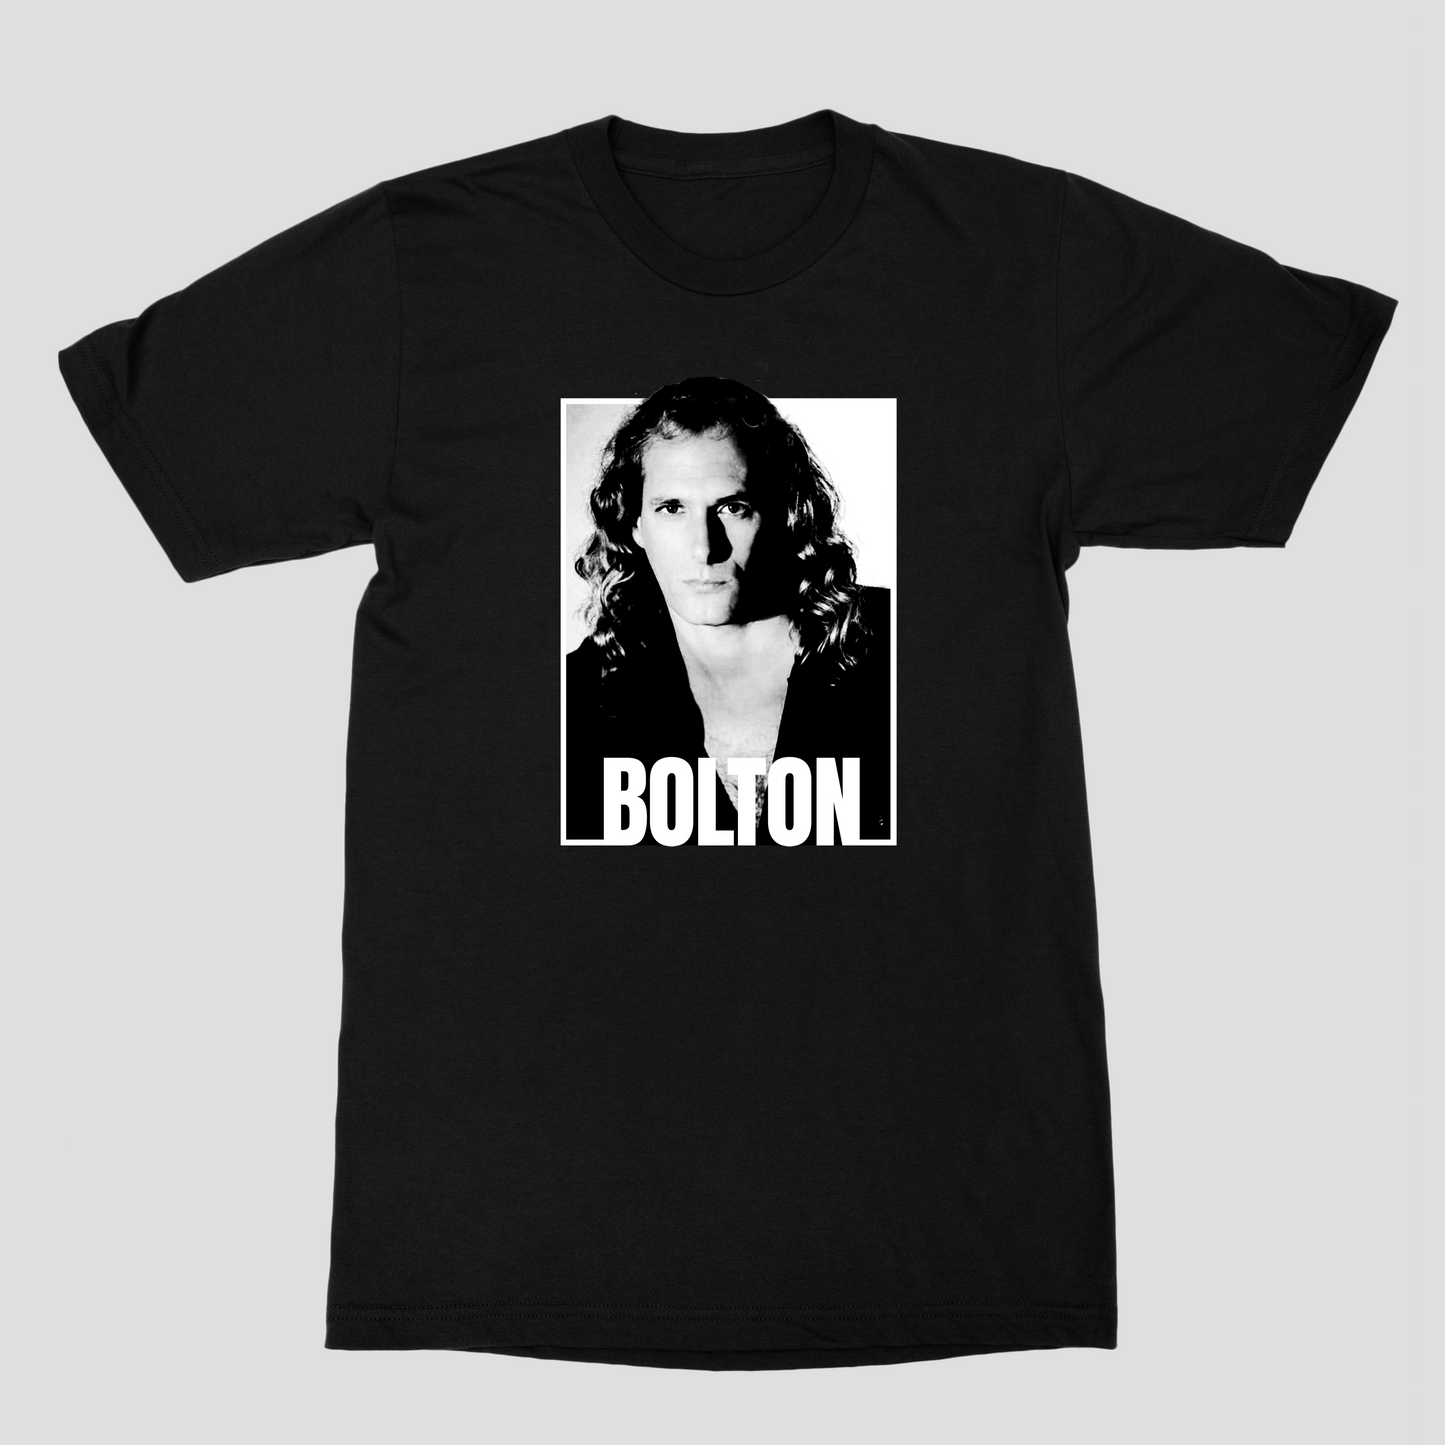 Bolton Vintage Photo T-Shirt